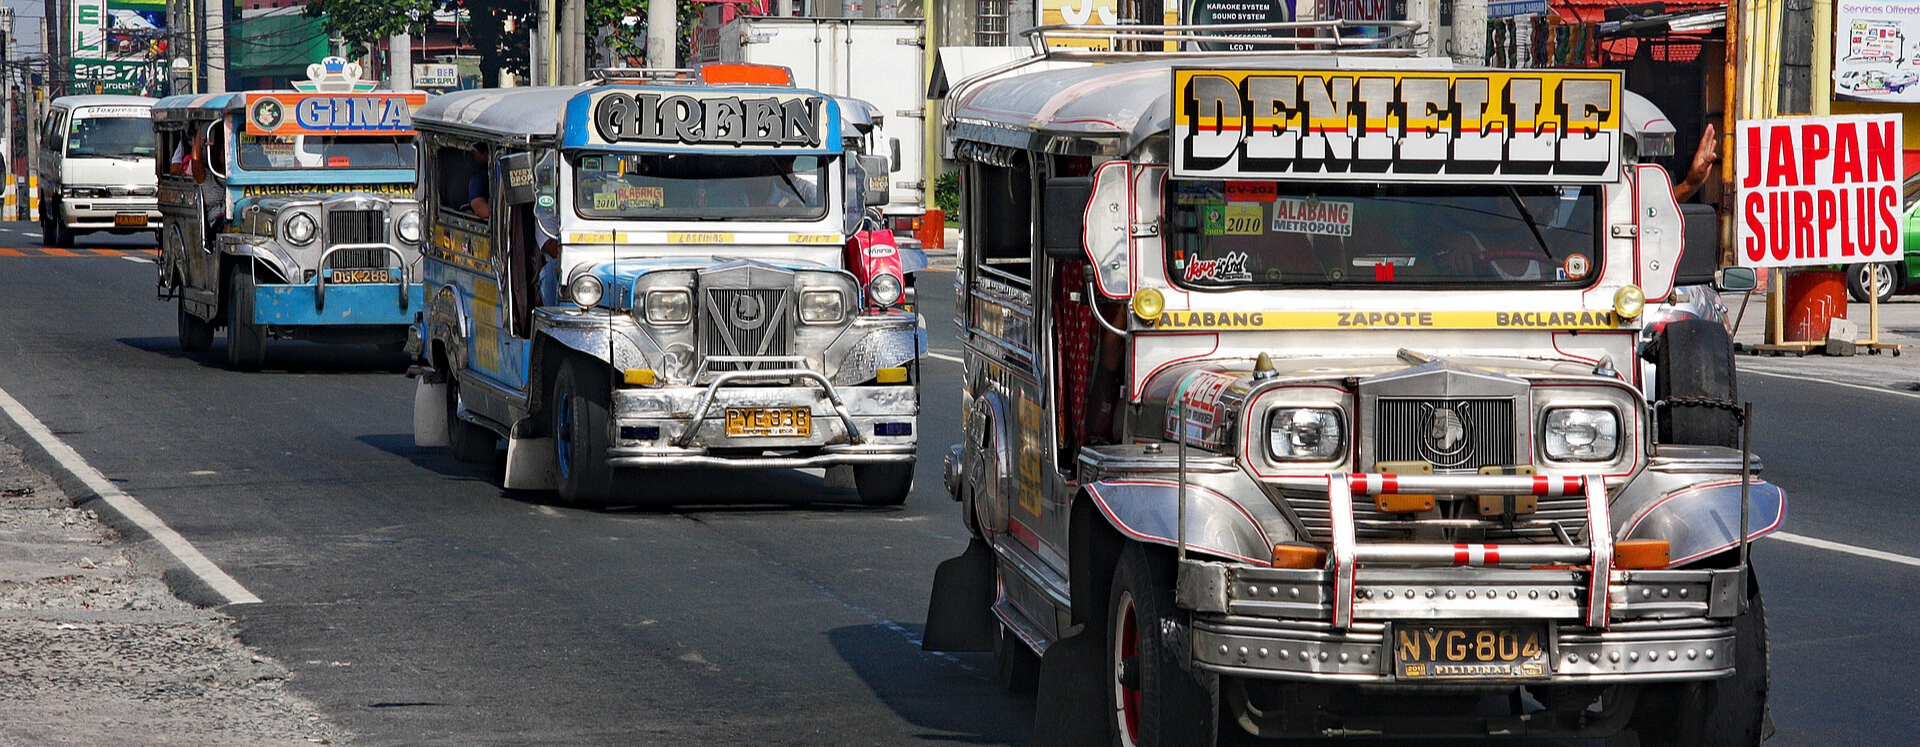 Jeepney Manille Visit Philippines